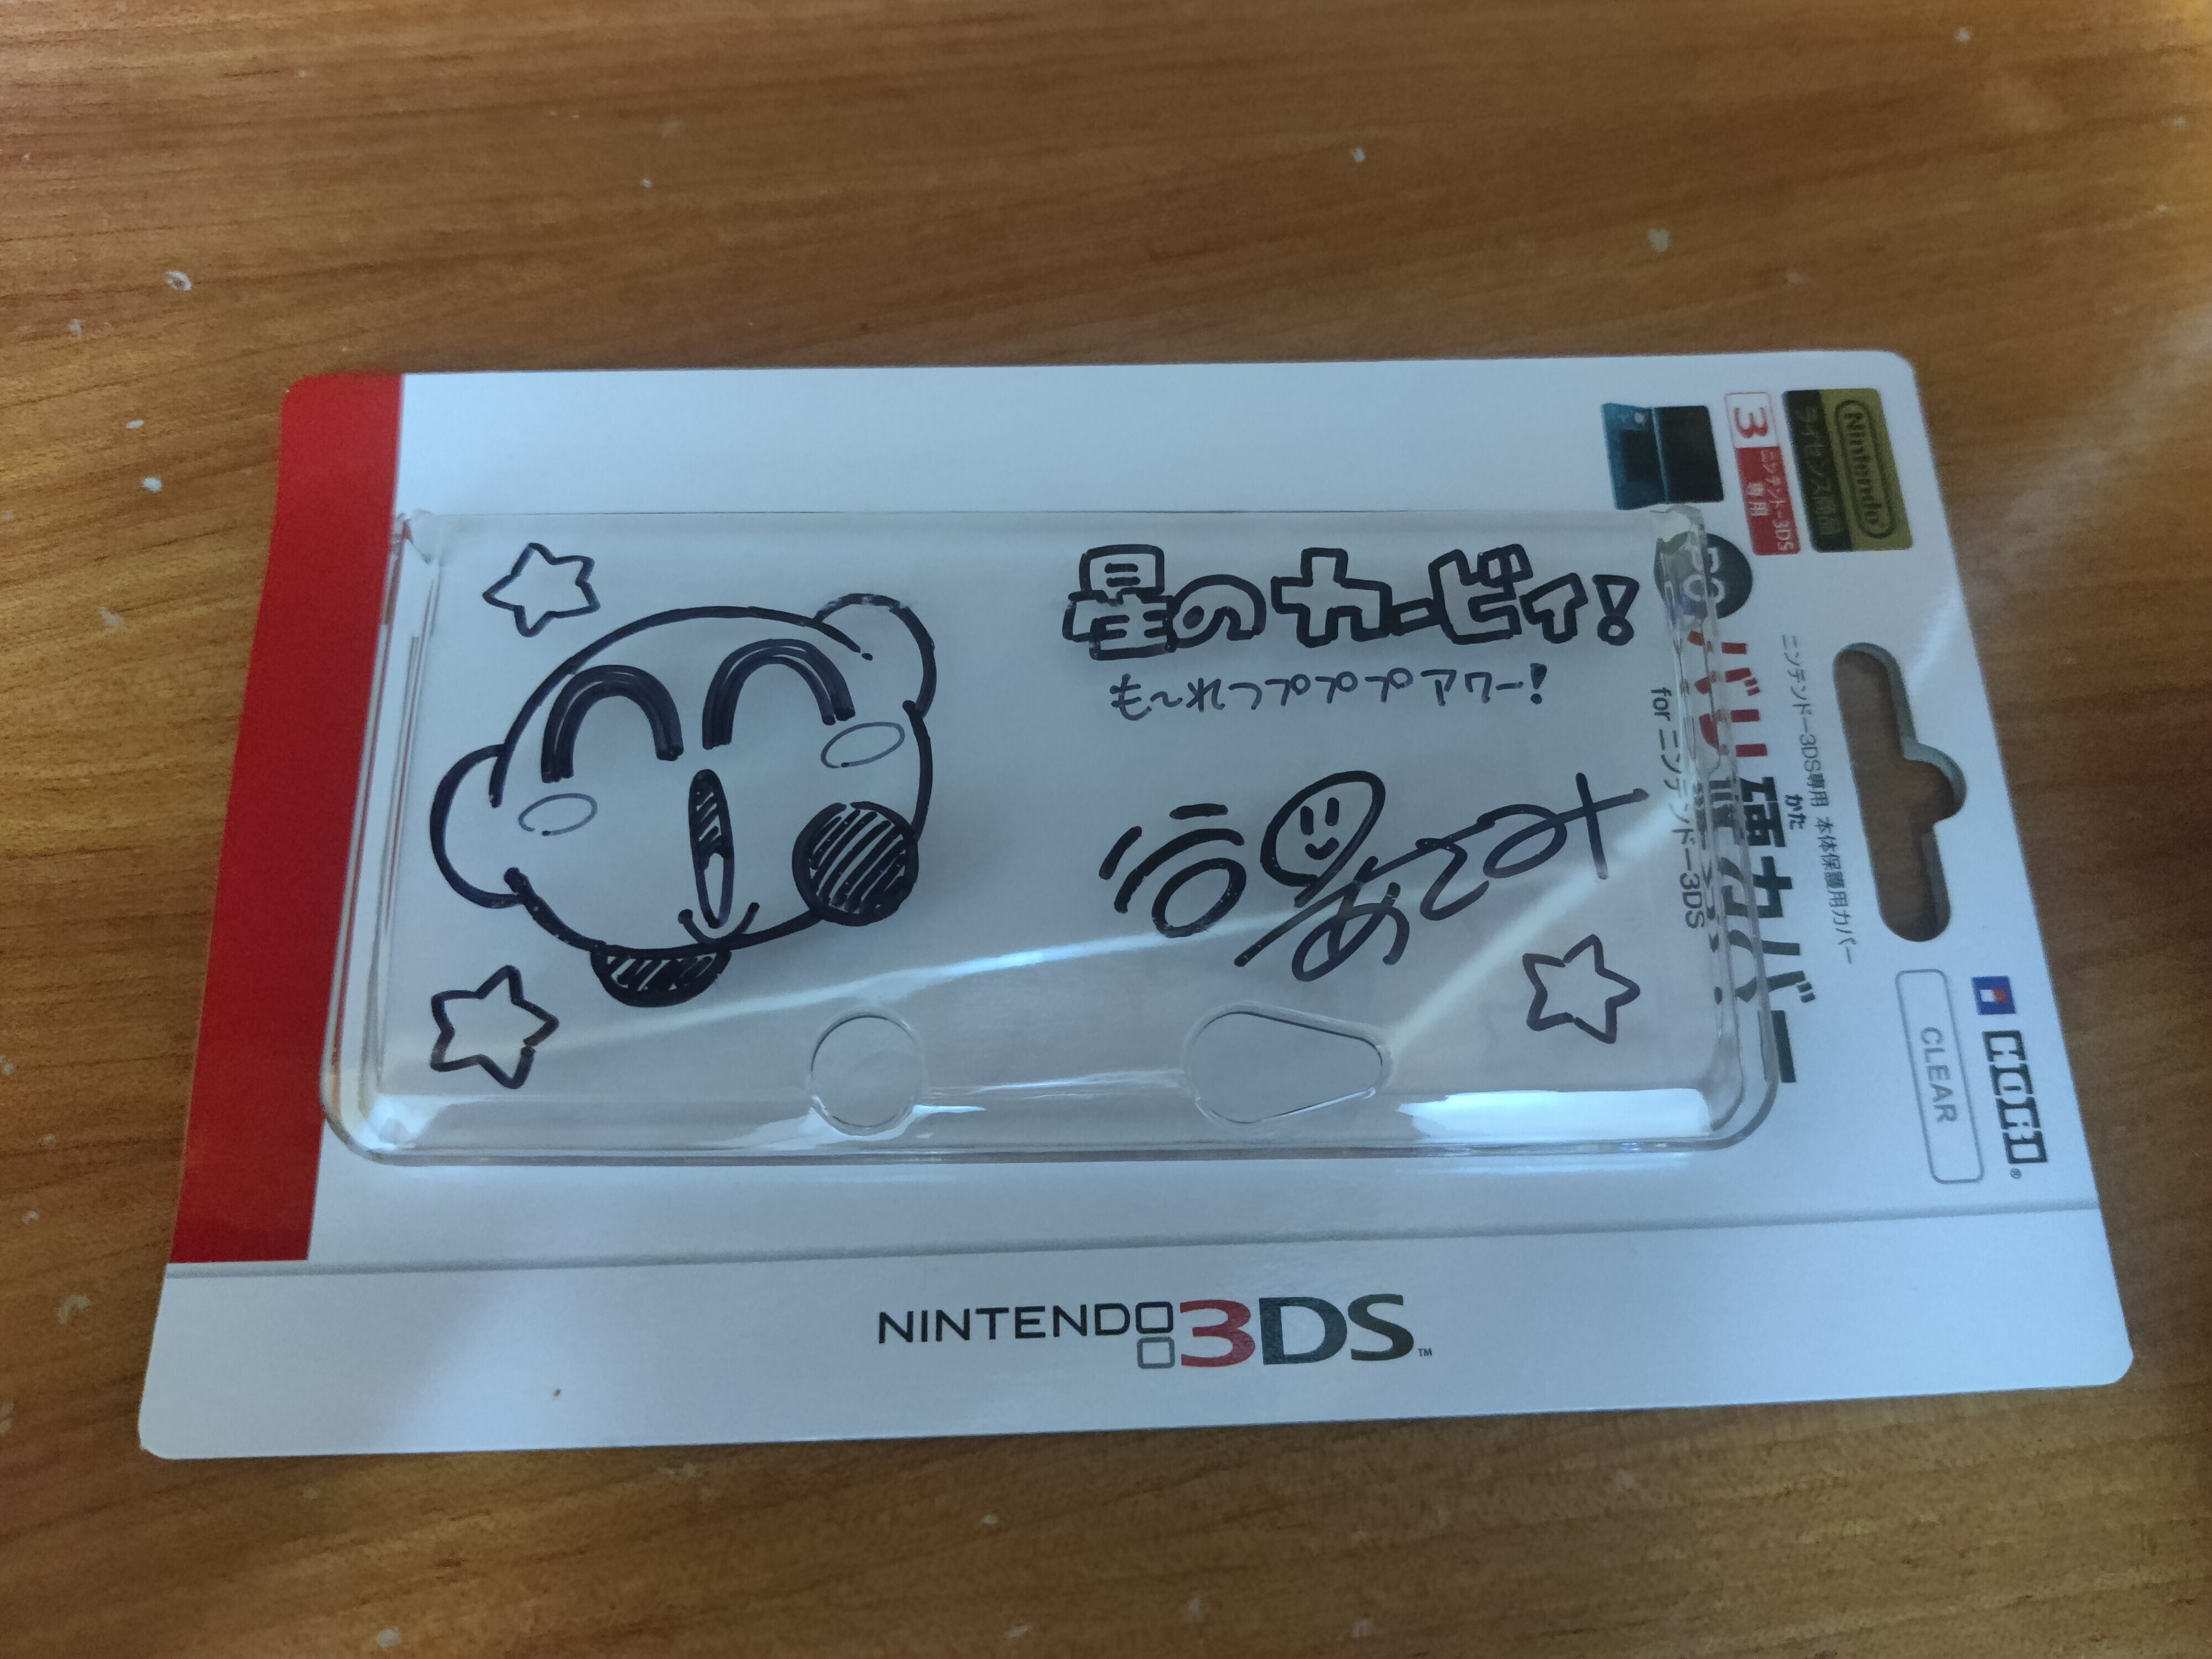  Nintendo 3DS Kirby Corocoro Faceplate